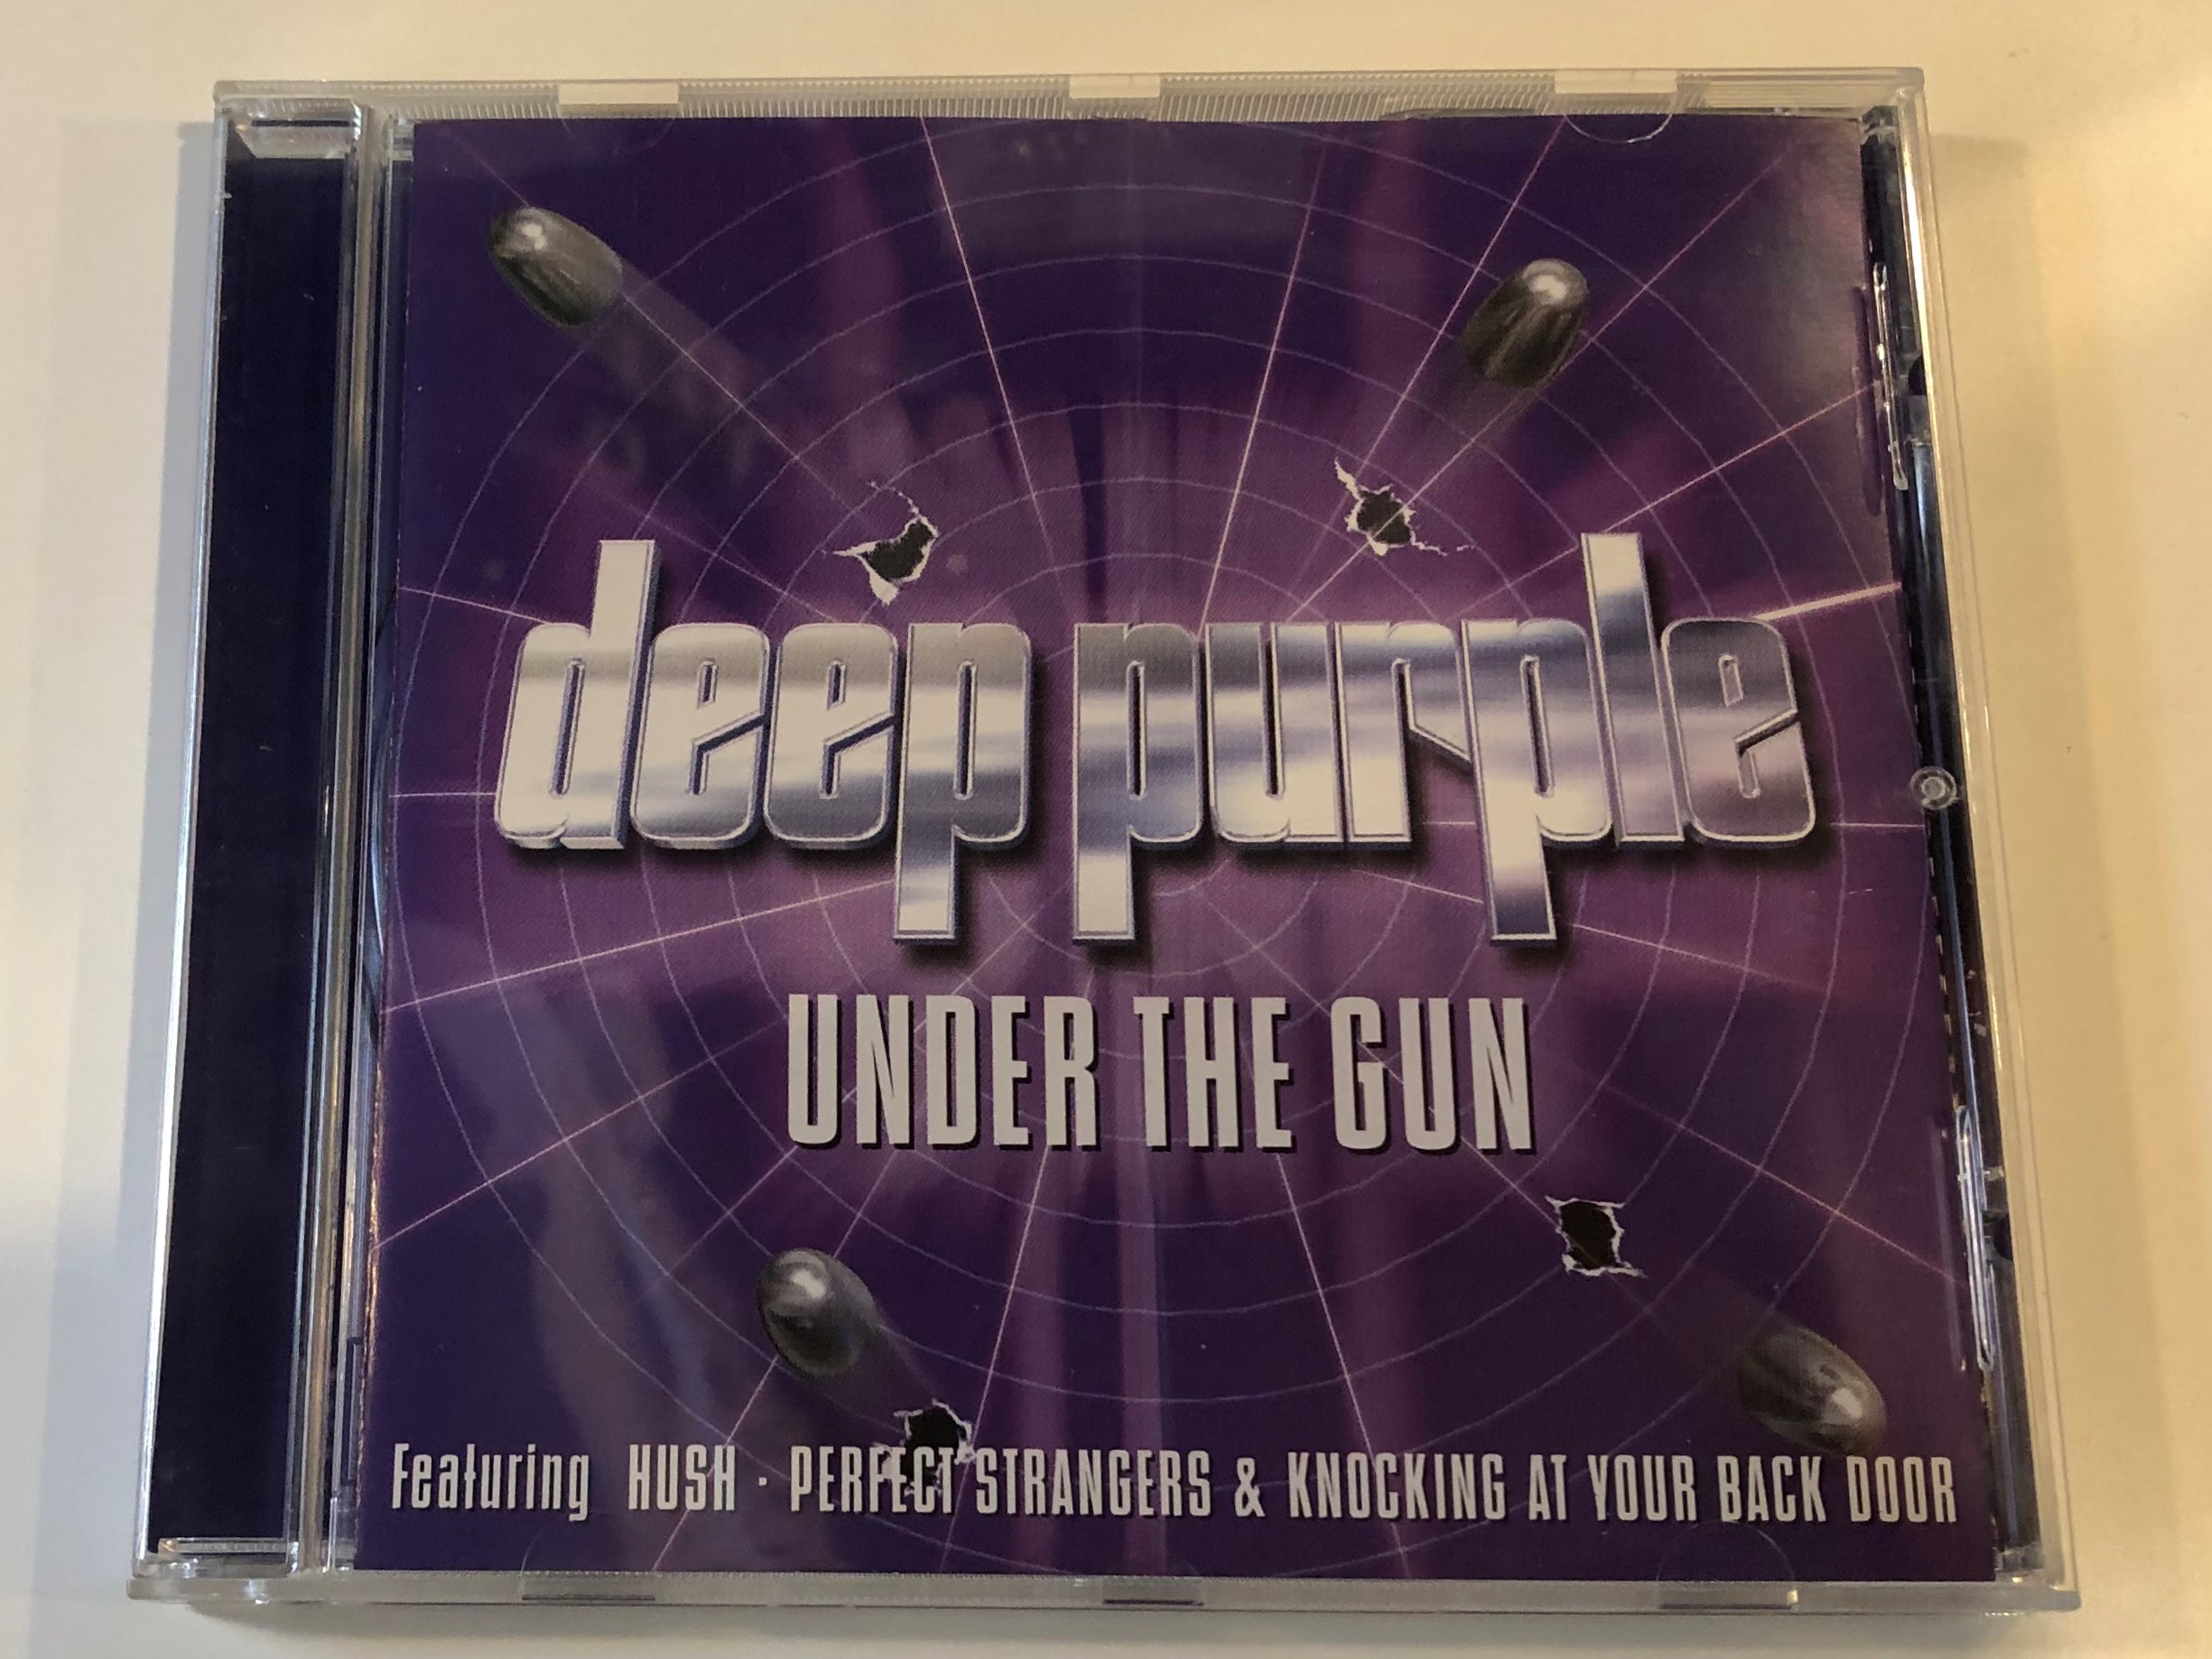 deep-purple-under-the-gun-featuring-hush-perfect-strangers-knocking-at-your-back-door-spectrum-music-audio-cd-1999-544-204-2-1-.jpg